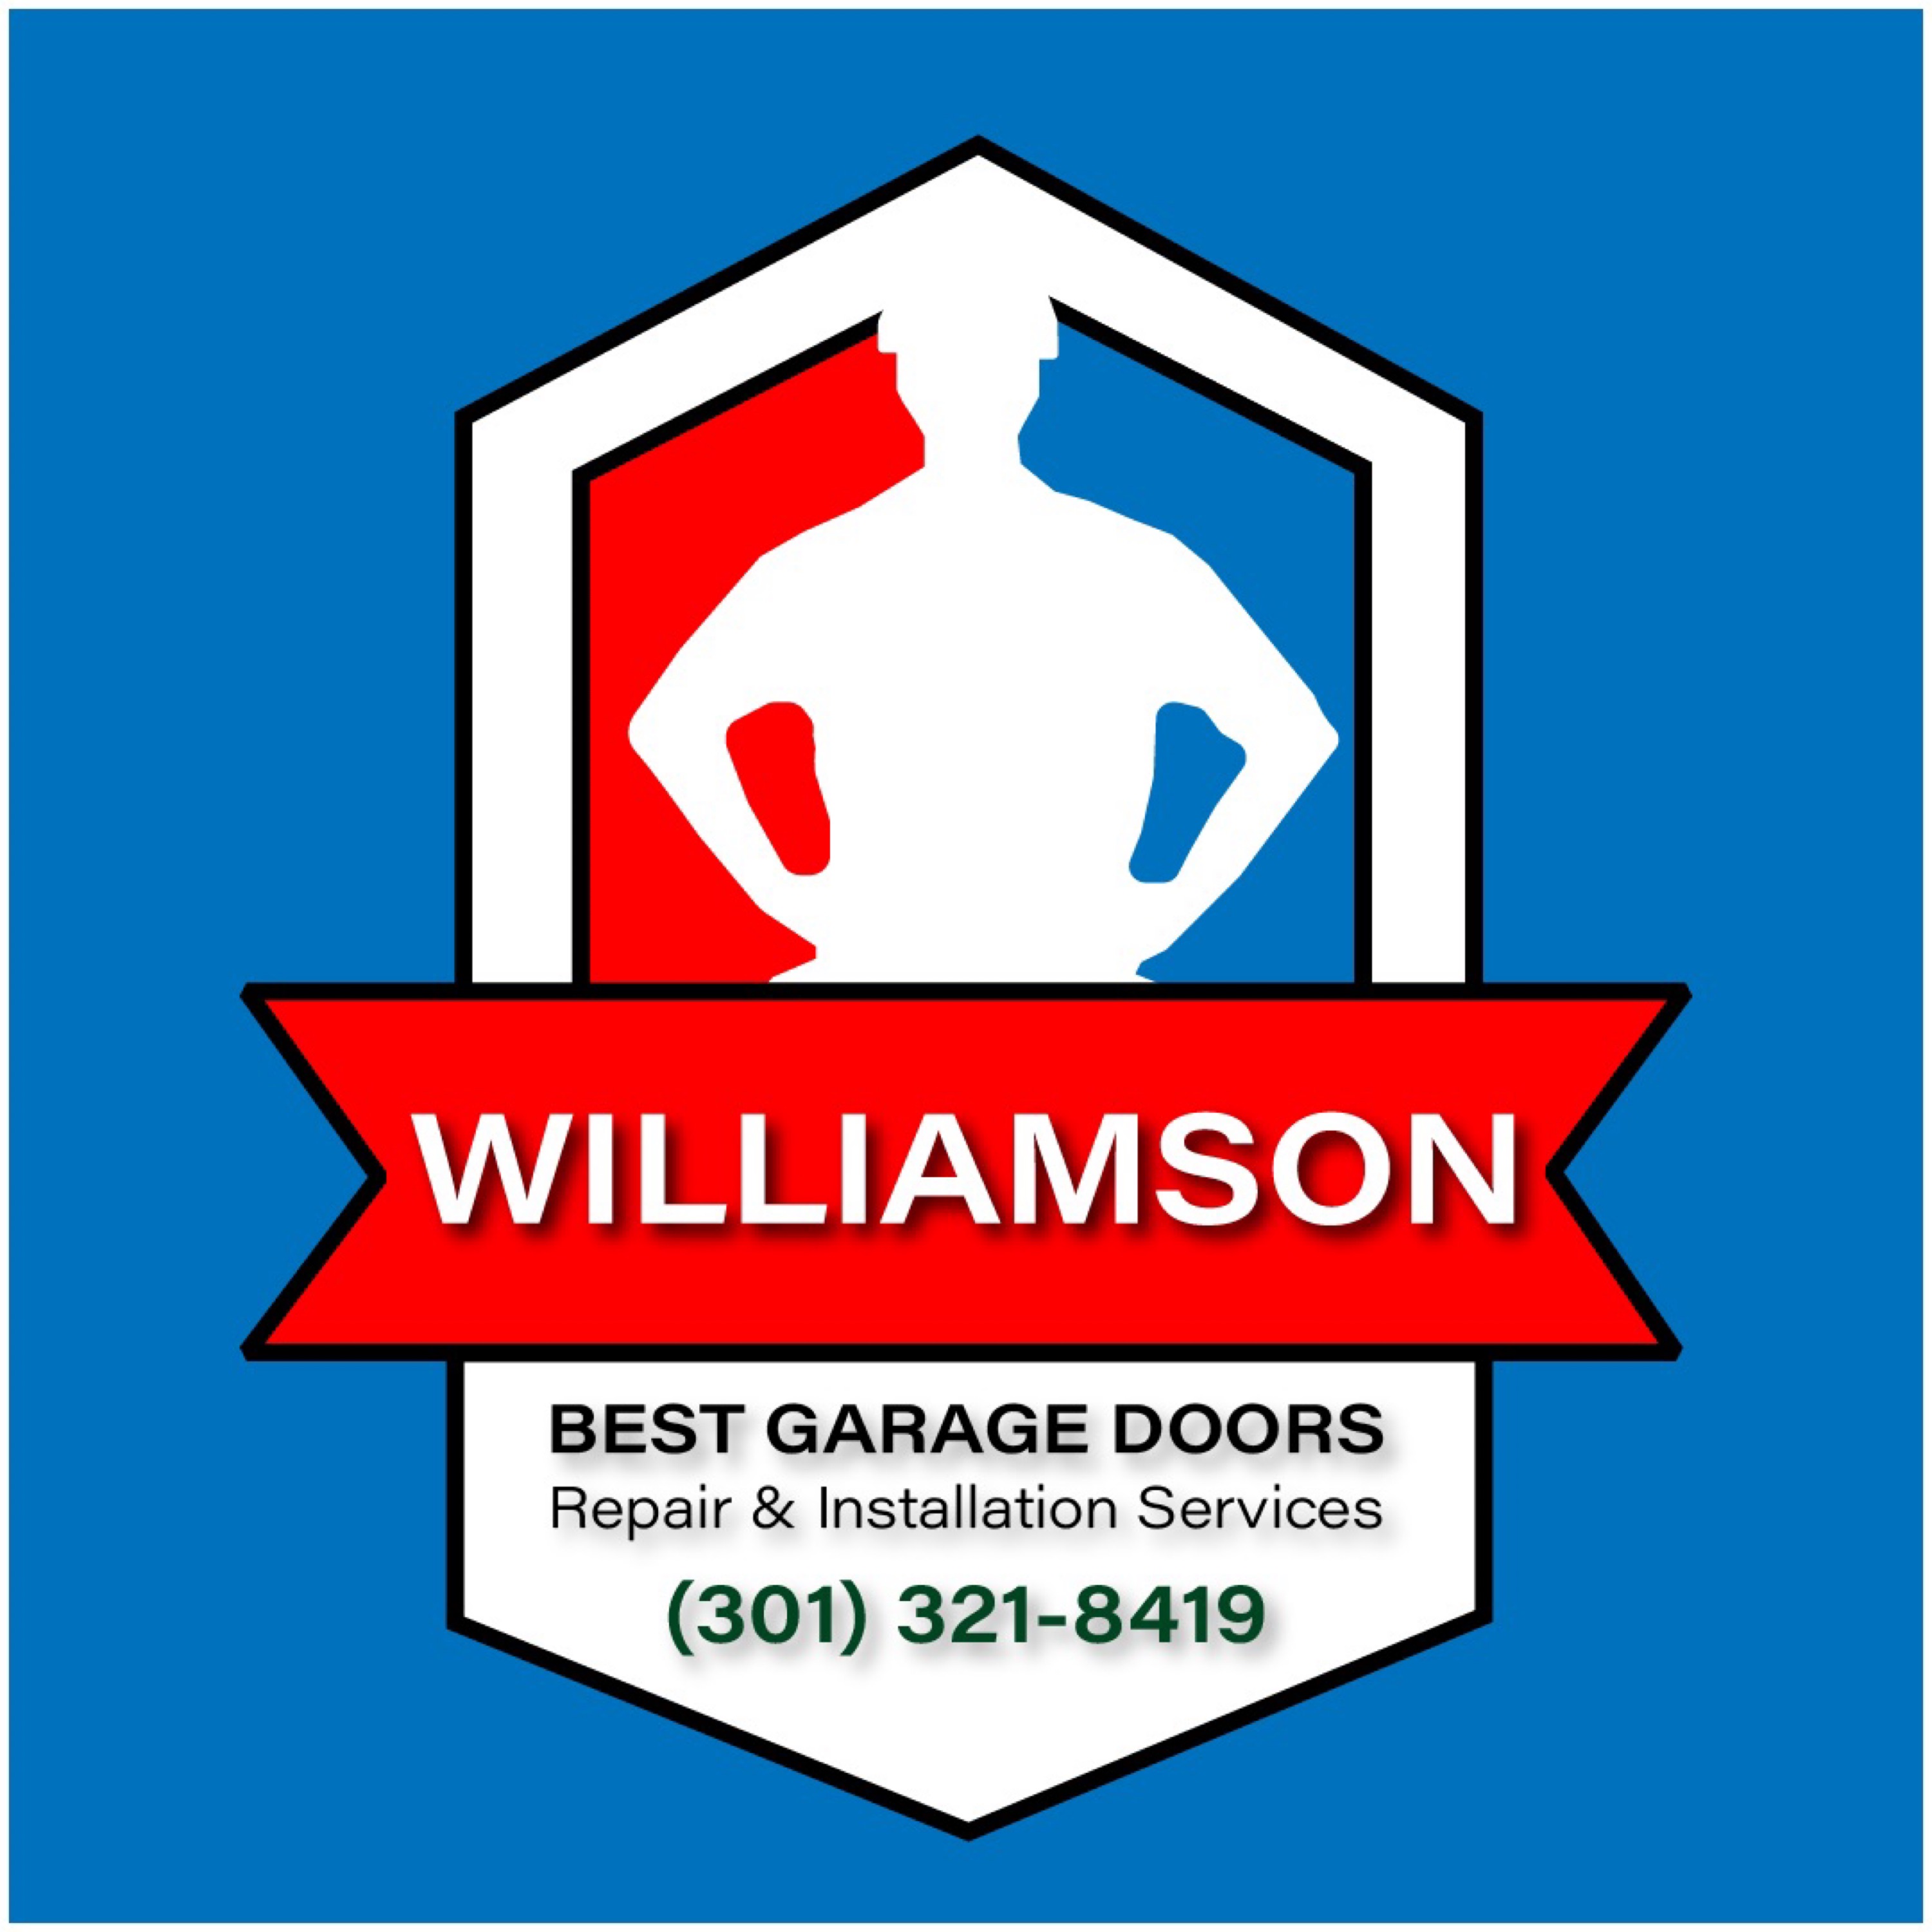 Williamson Best Garage Doors, Inc. Logo